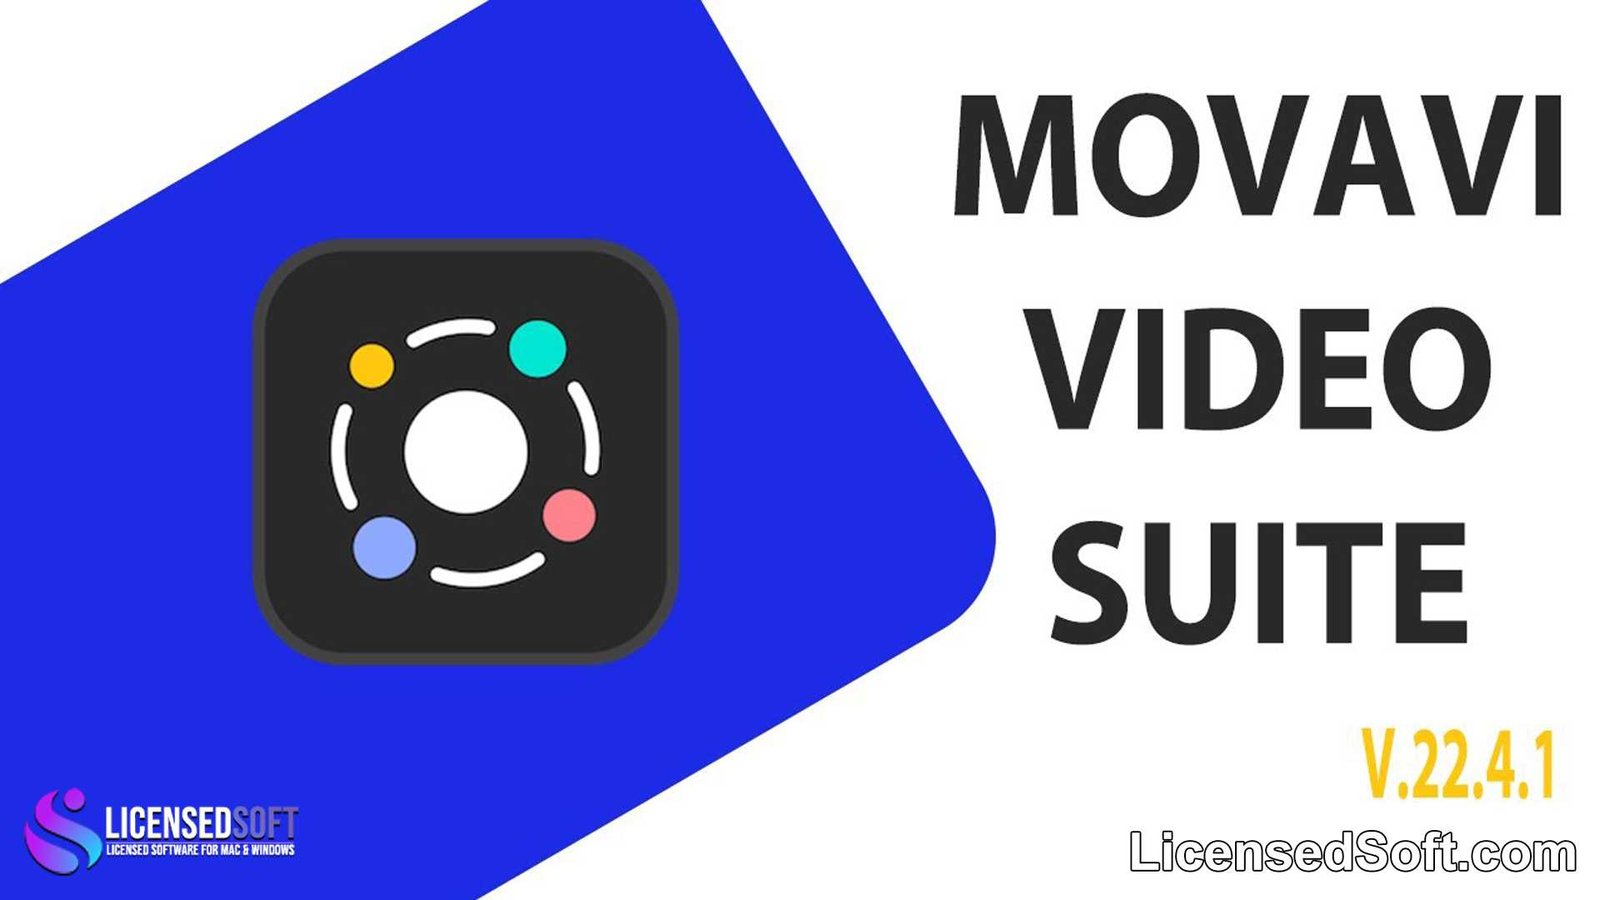 Movavi Video Suite 22.4.1 Lifetime Premium Full By LicensedSoft